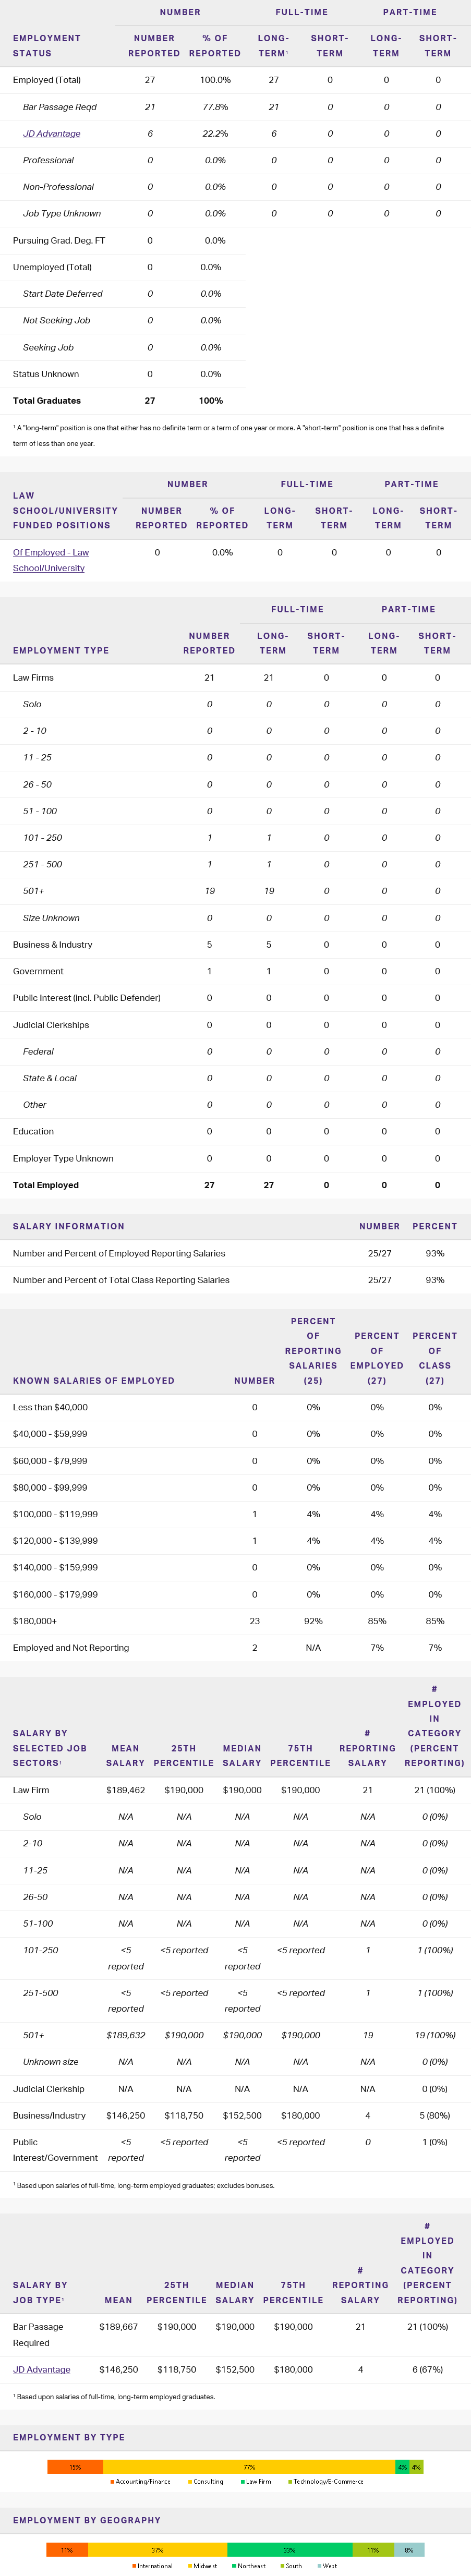 JD-MBA 2018 EMPLOYMENT STATISTICS TABLE